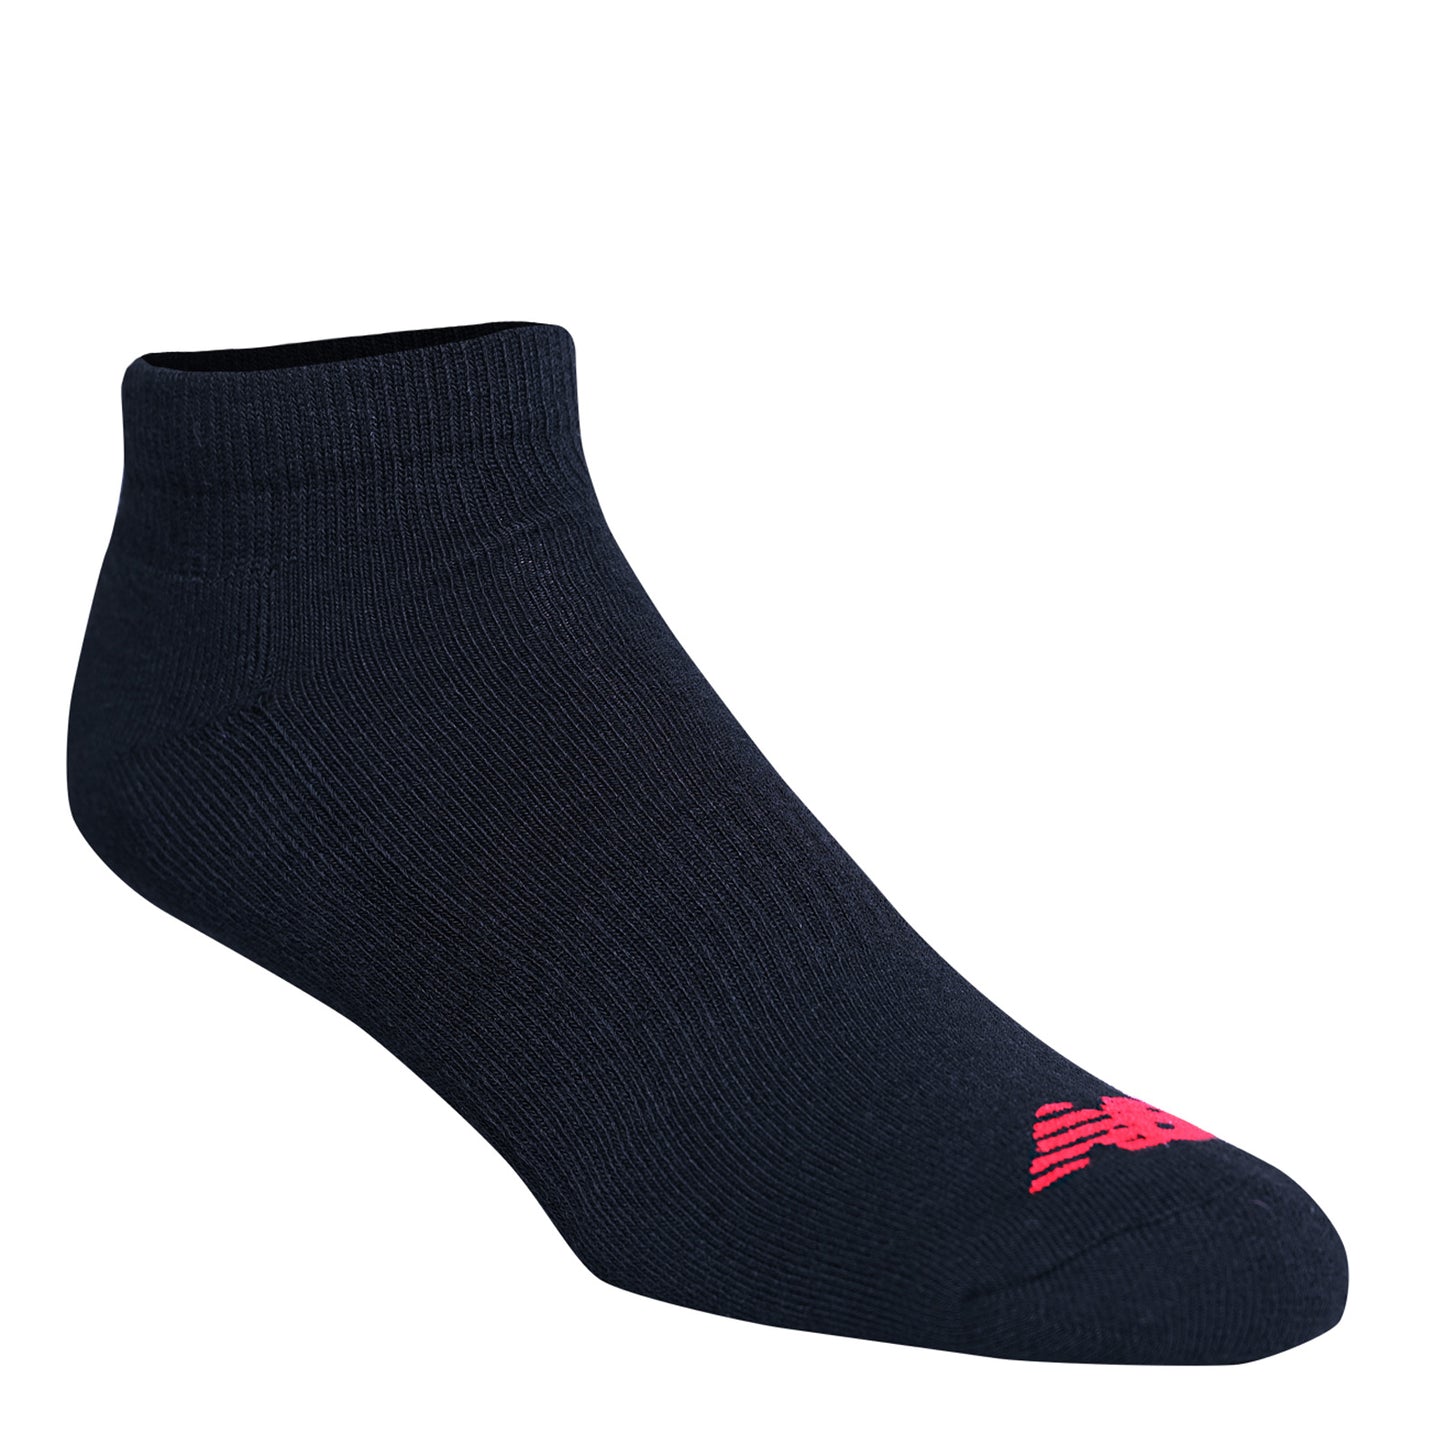 Peltz Shoes  Men's New Balance Athletic Quarter Socks - 6 Pack Black NBM201QT02002